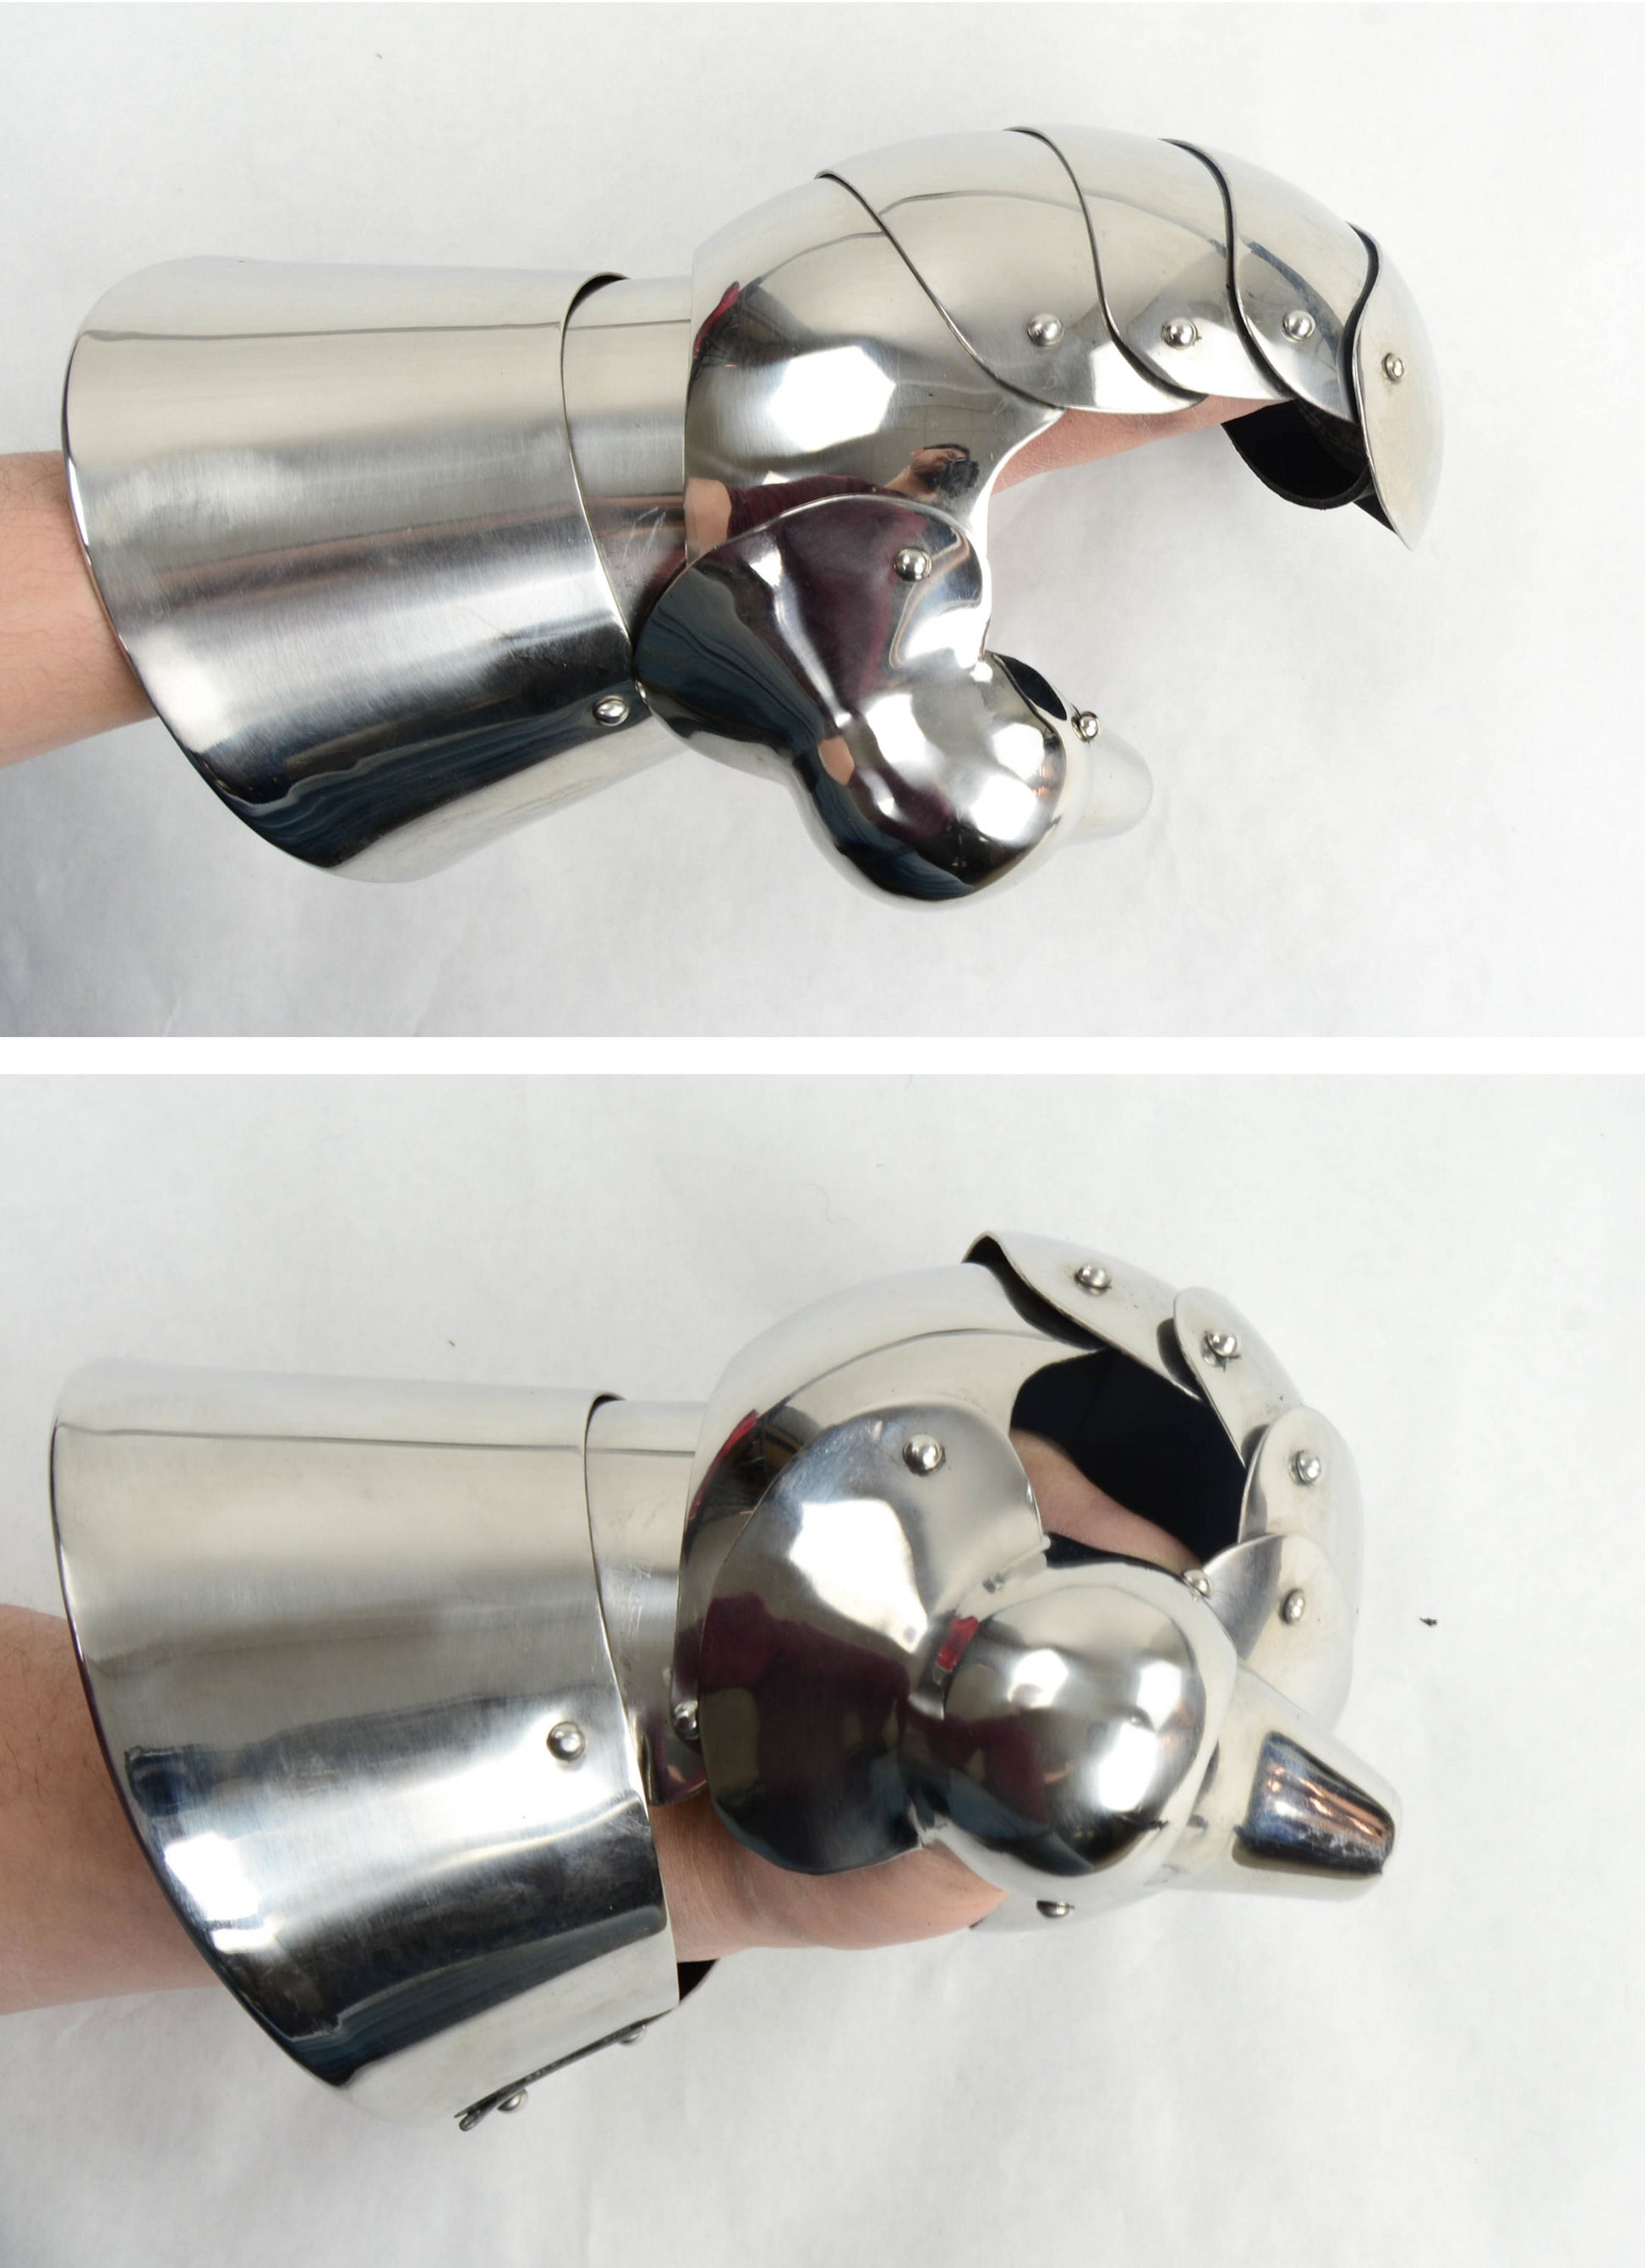 Stainless Steel Clamshell Gauntlets - 16 Gauge